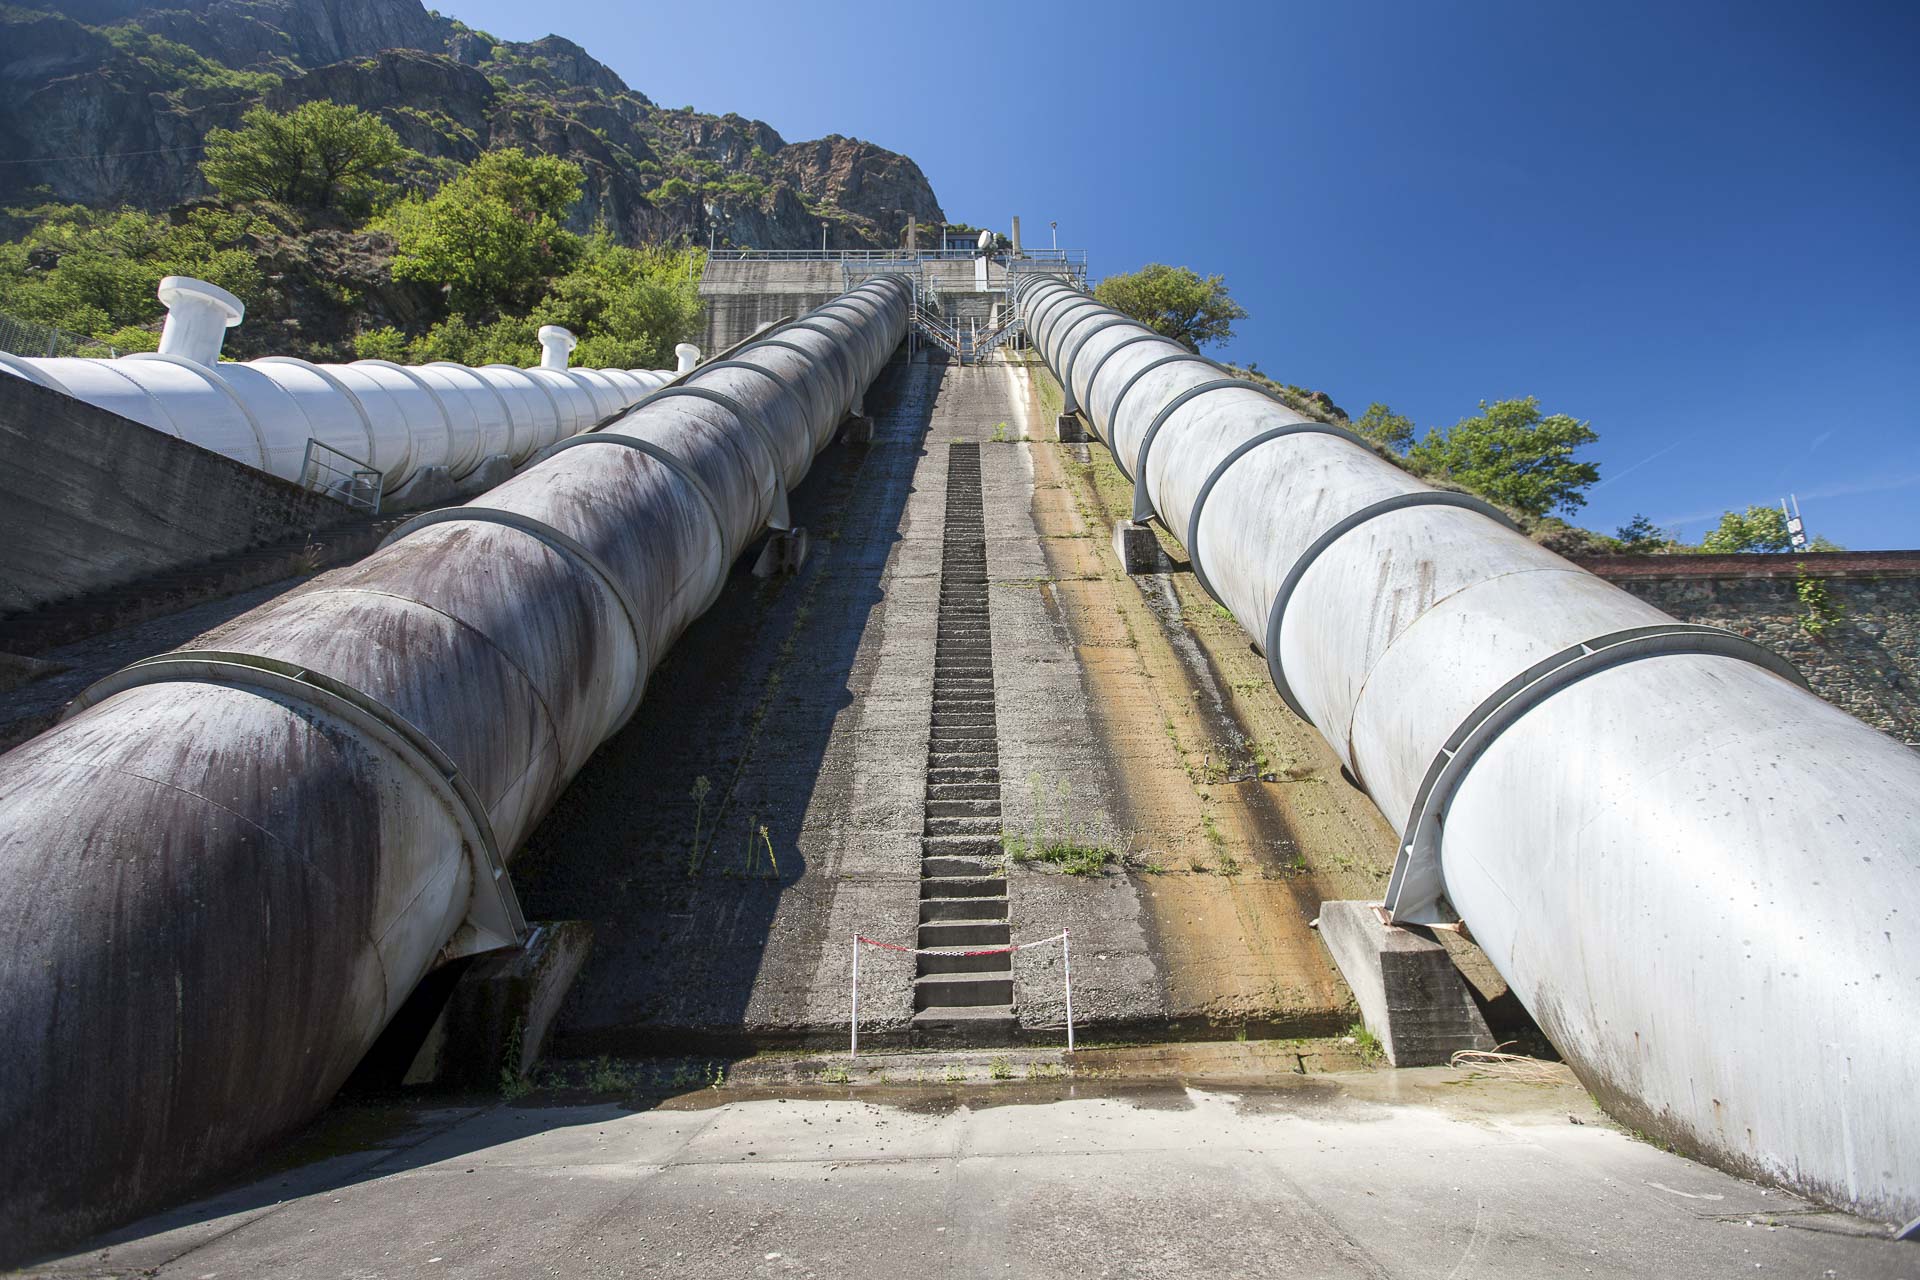 Centrale idroelettrica di Montjovet per produzione energia verde rinnovabile CVA